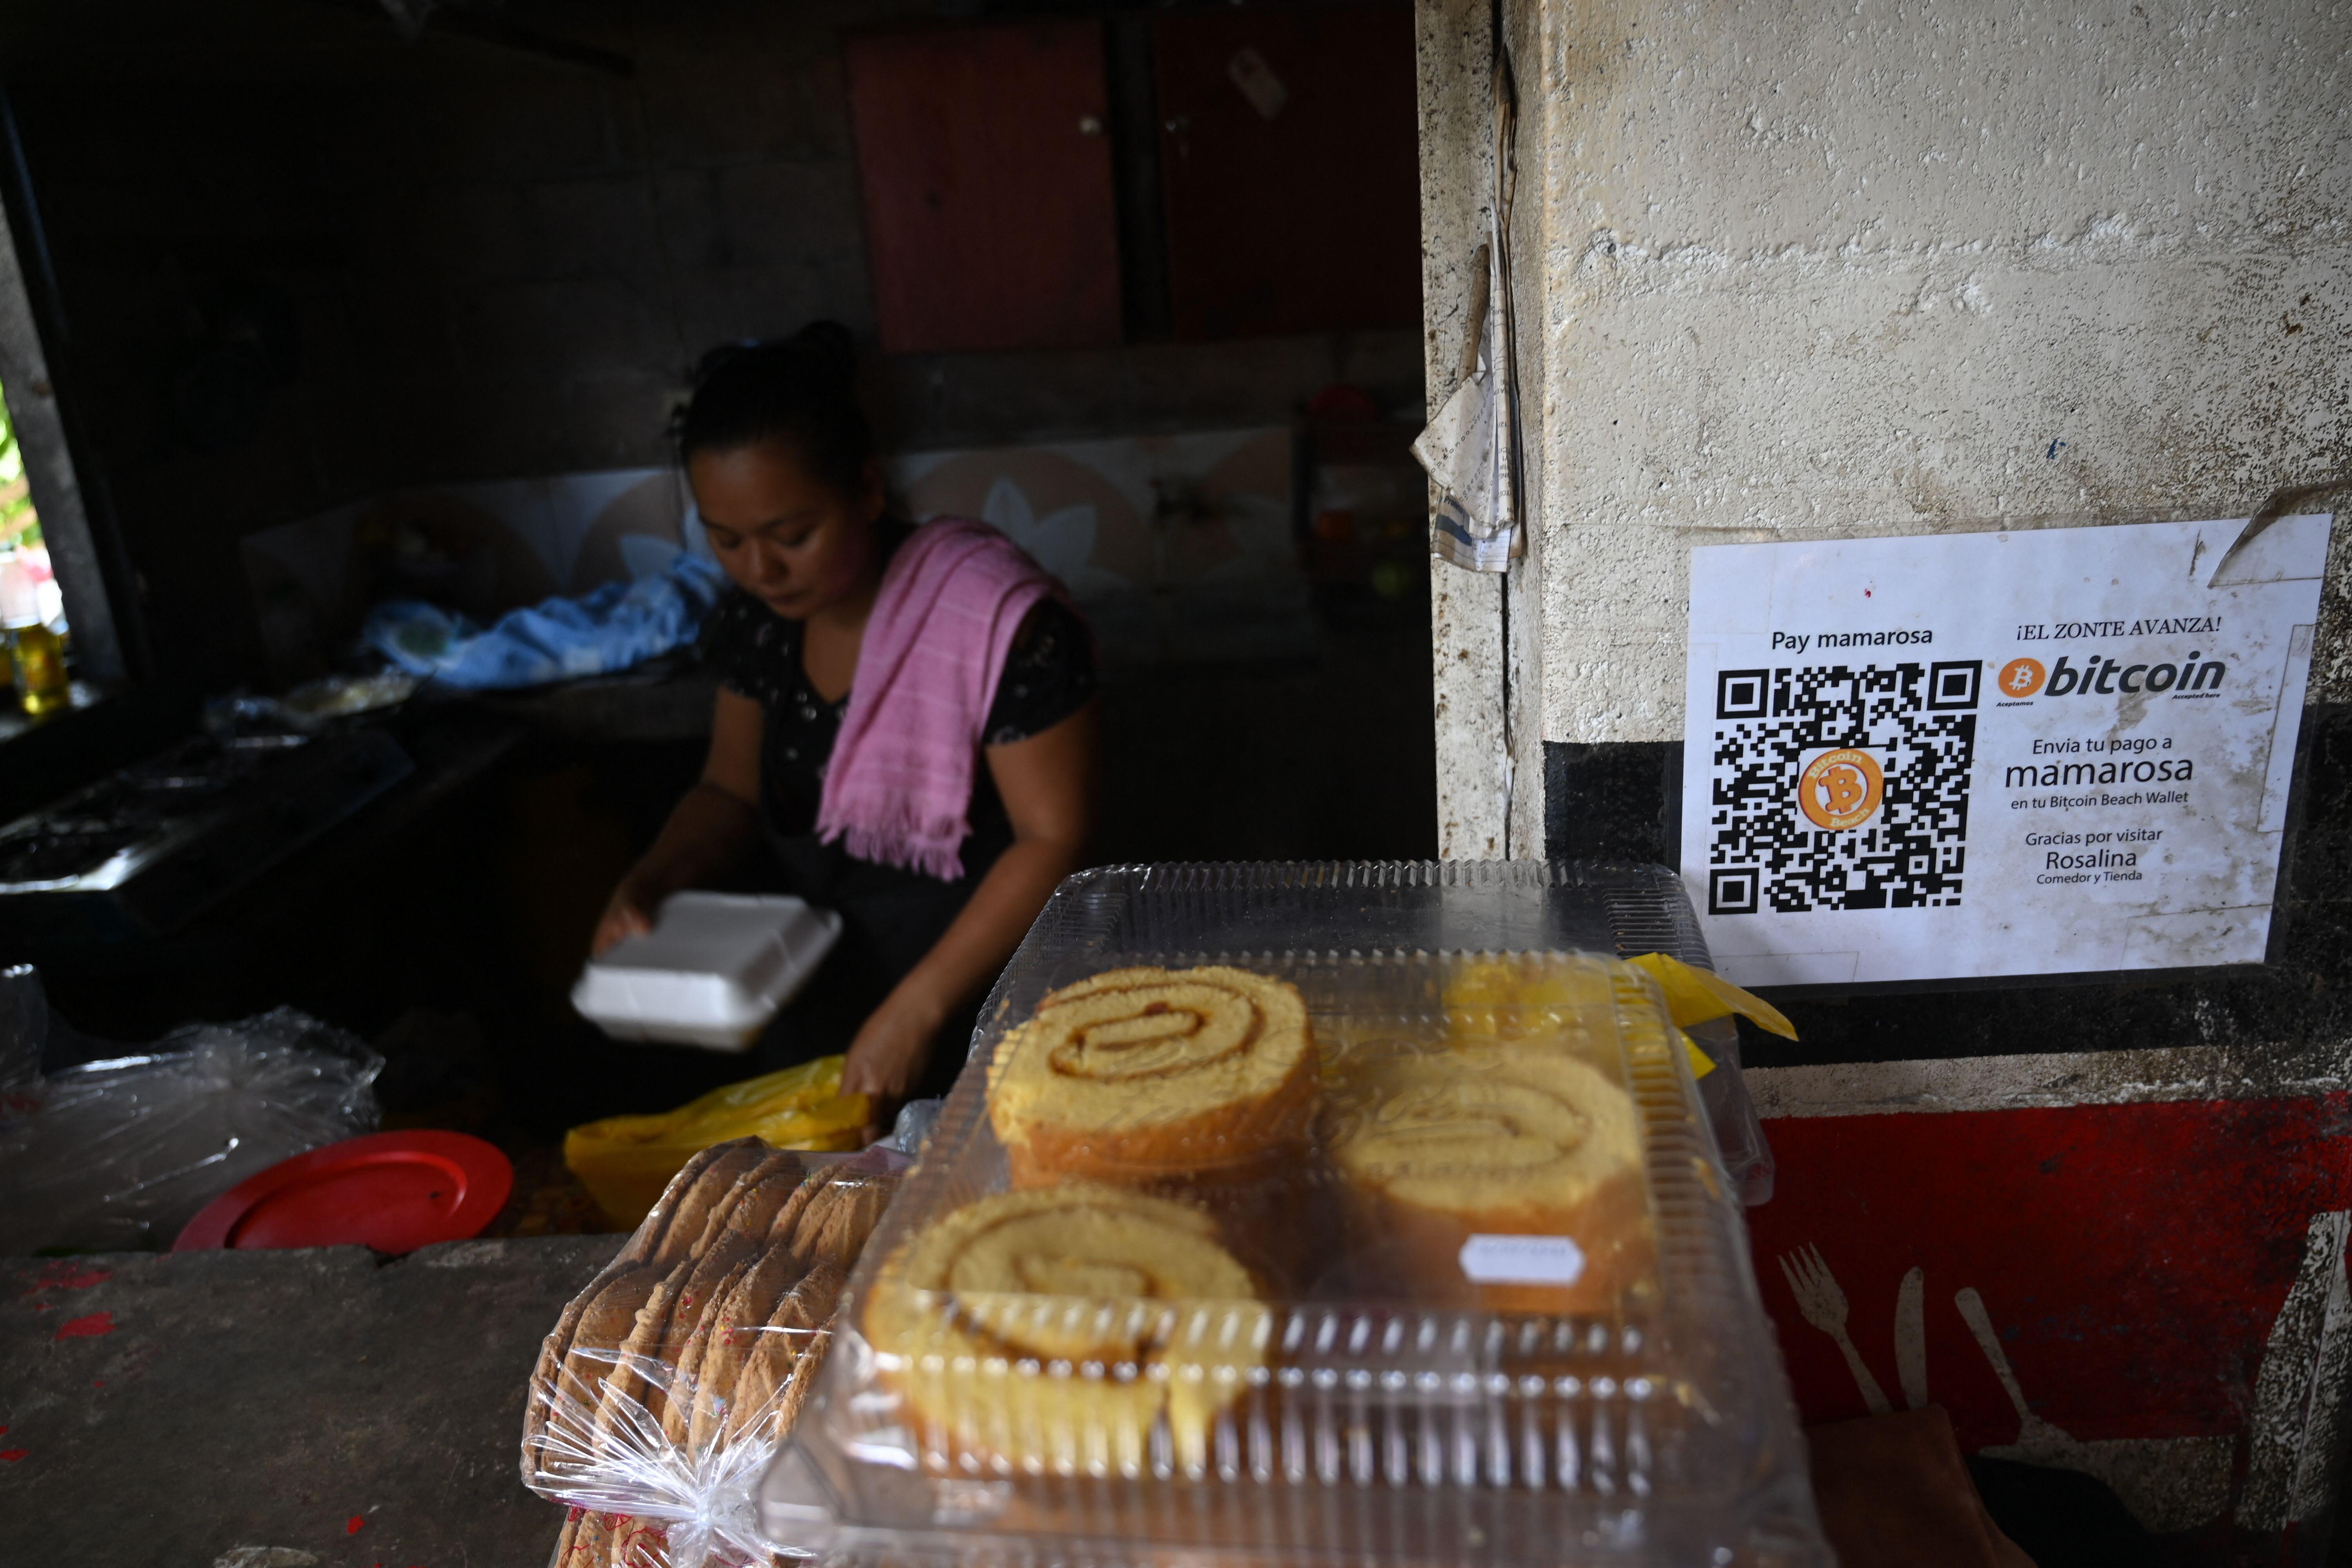 A woman is seen in a store where bitcoins are accepted in El Zonte, La Libertad, El Salvador.